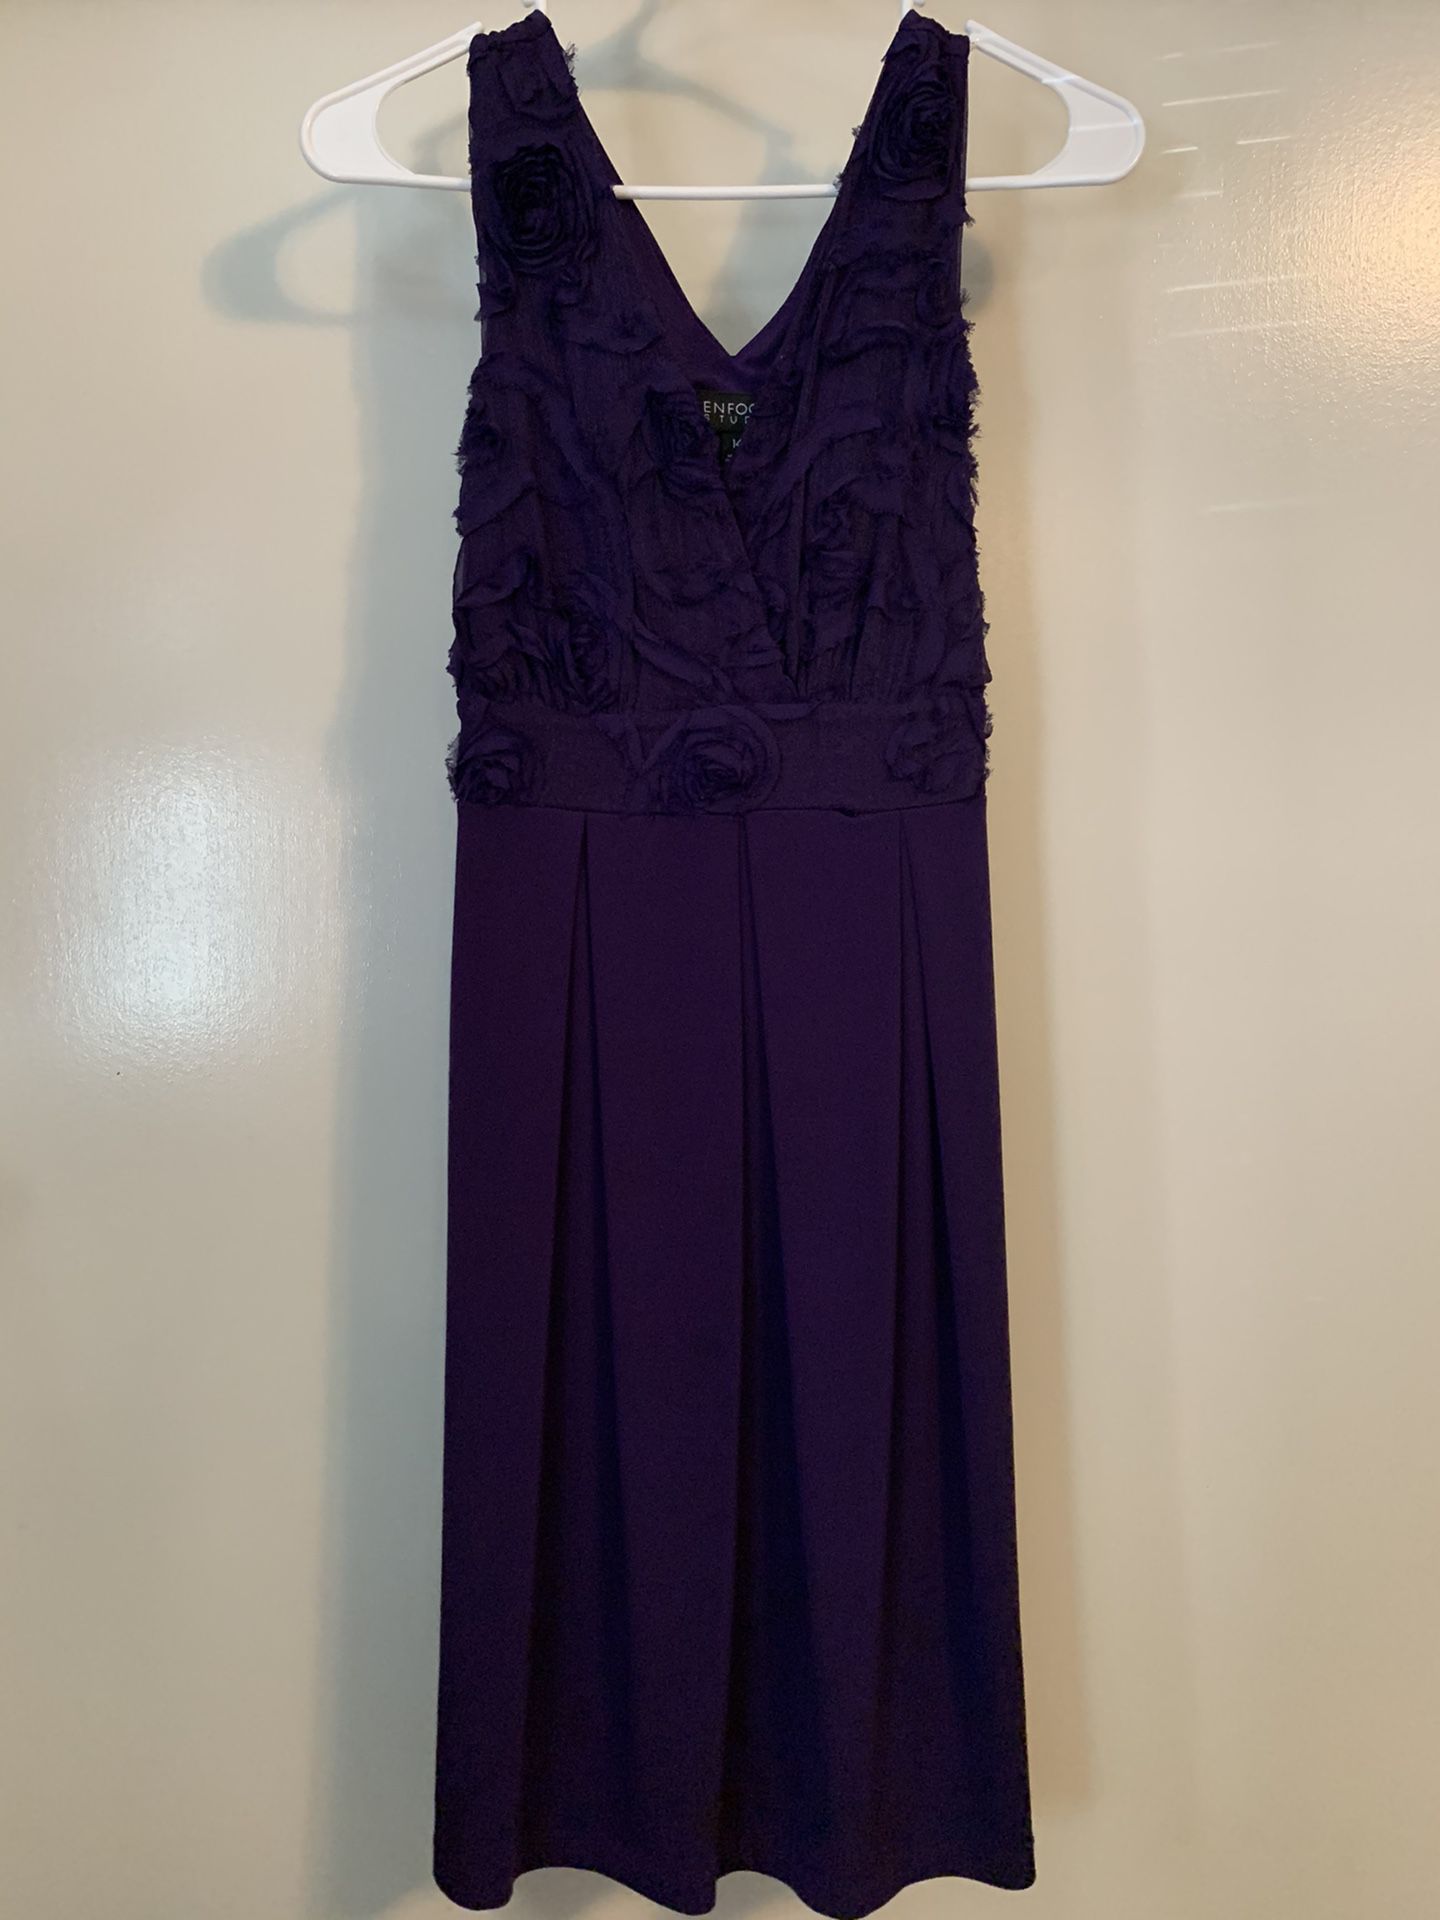 En Focus Studio Purple Rhinestone Embellished Fit And Flare Party Dress .